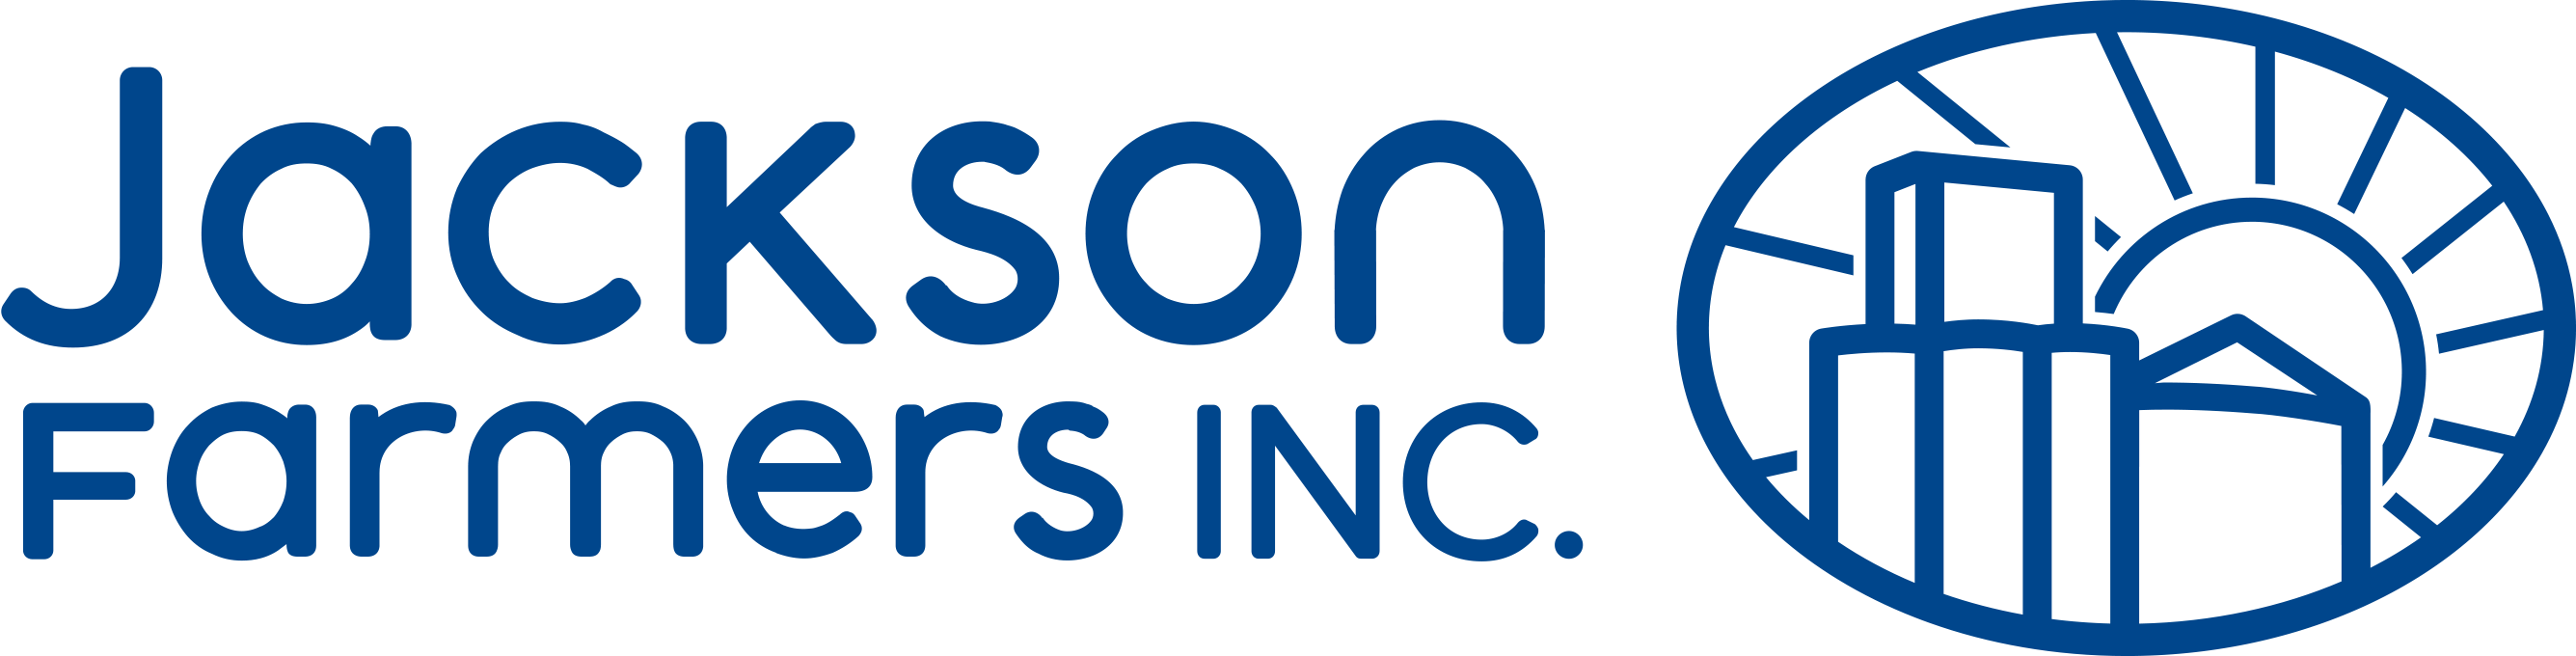 Jackson Farmers logo